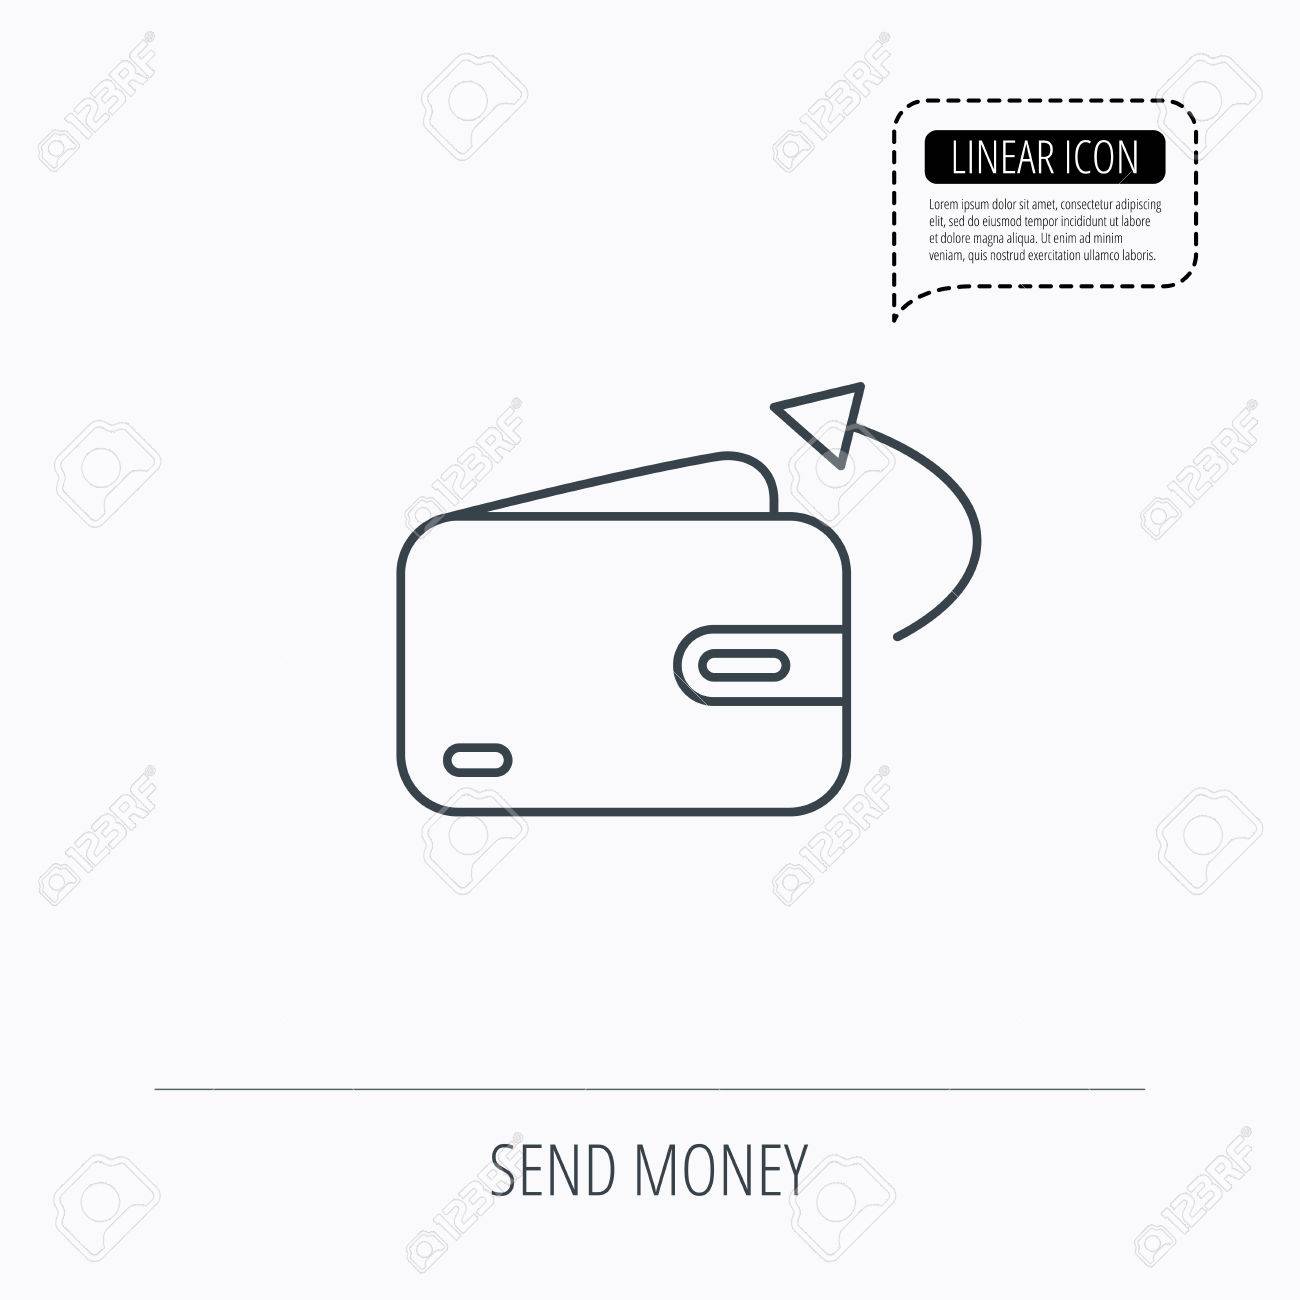 Send money icon Cash wallet sign Royalty Free Vector Image